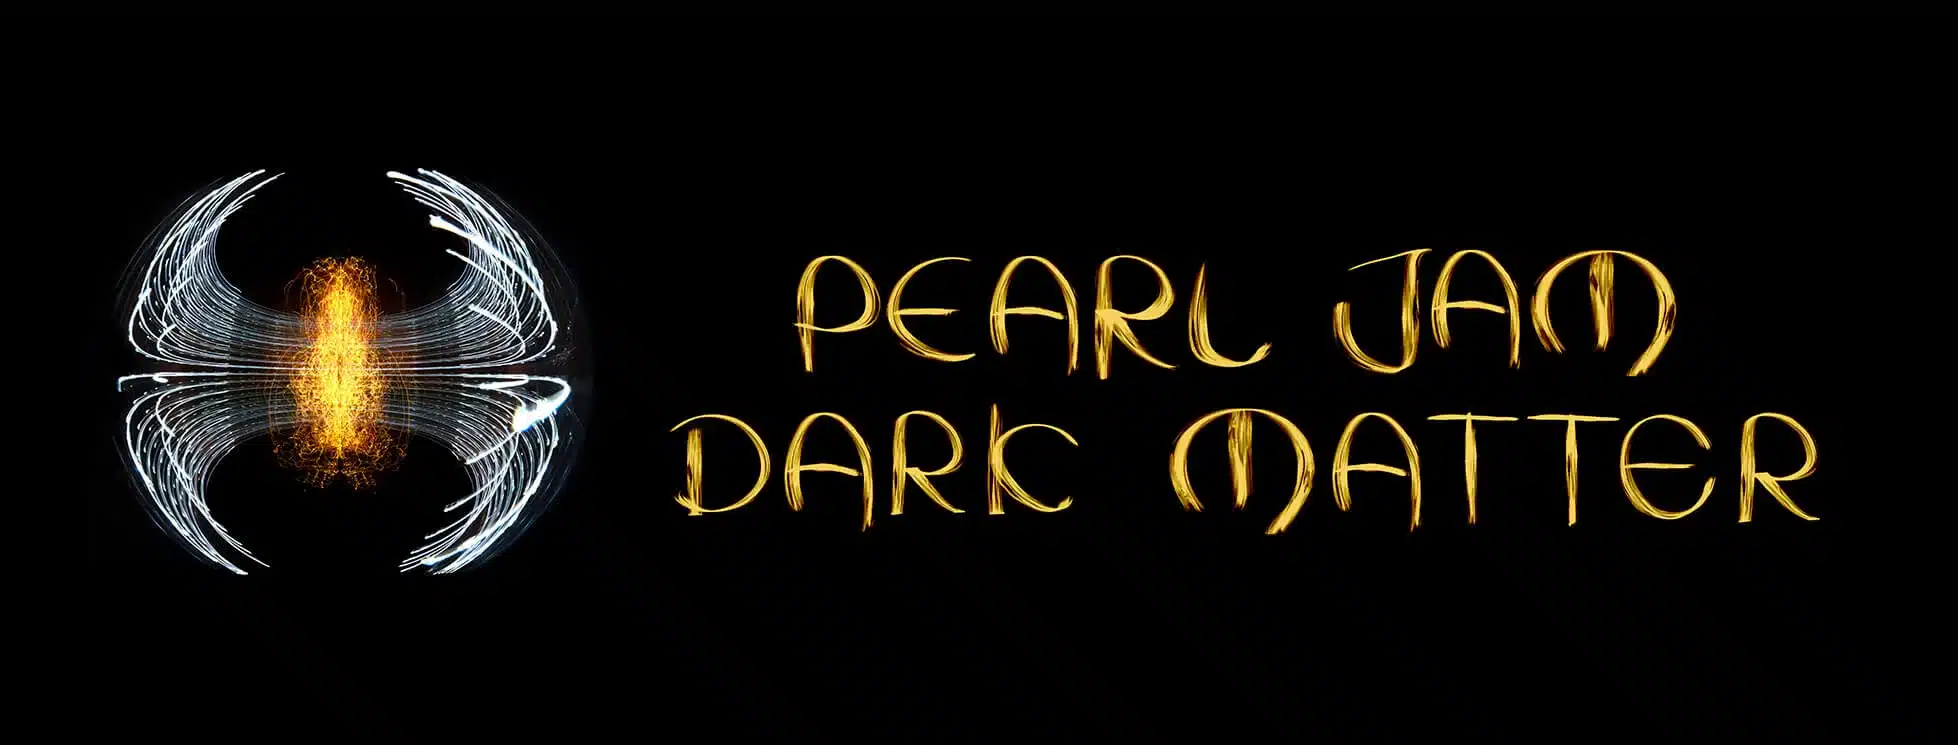 Dark Matter de Pearl Jam